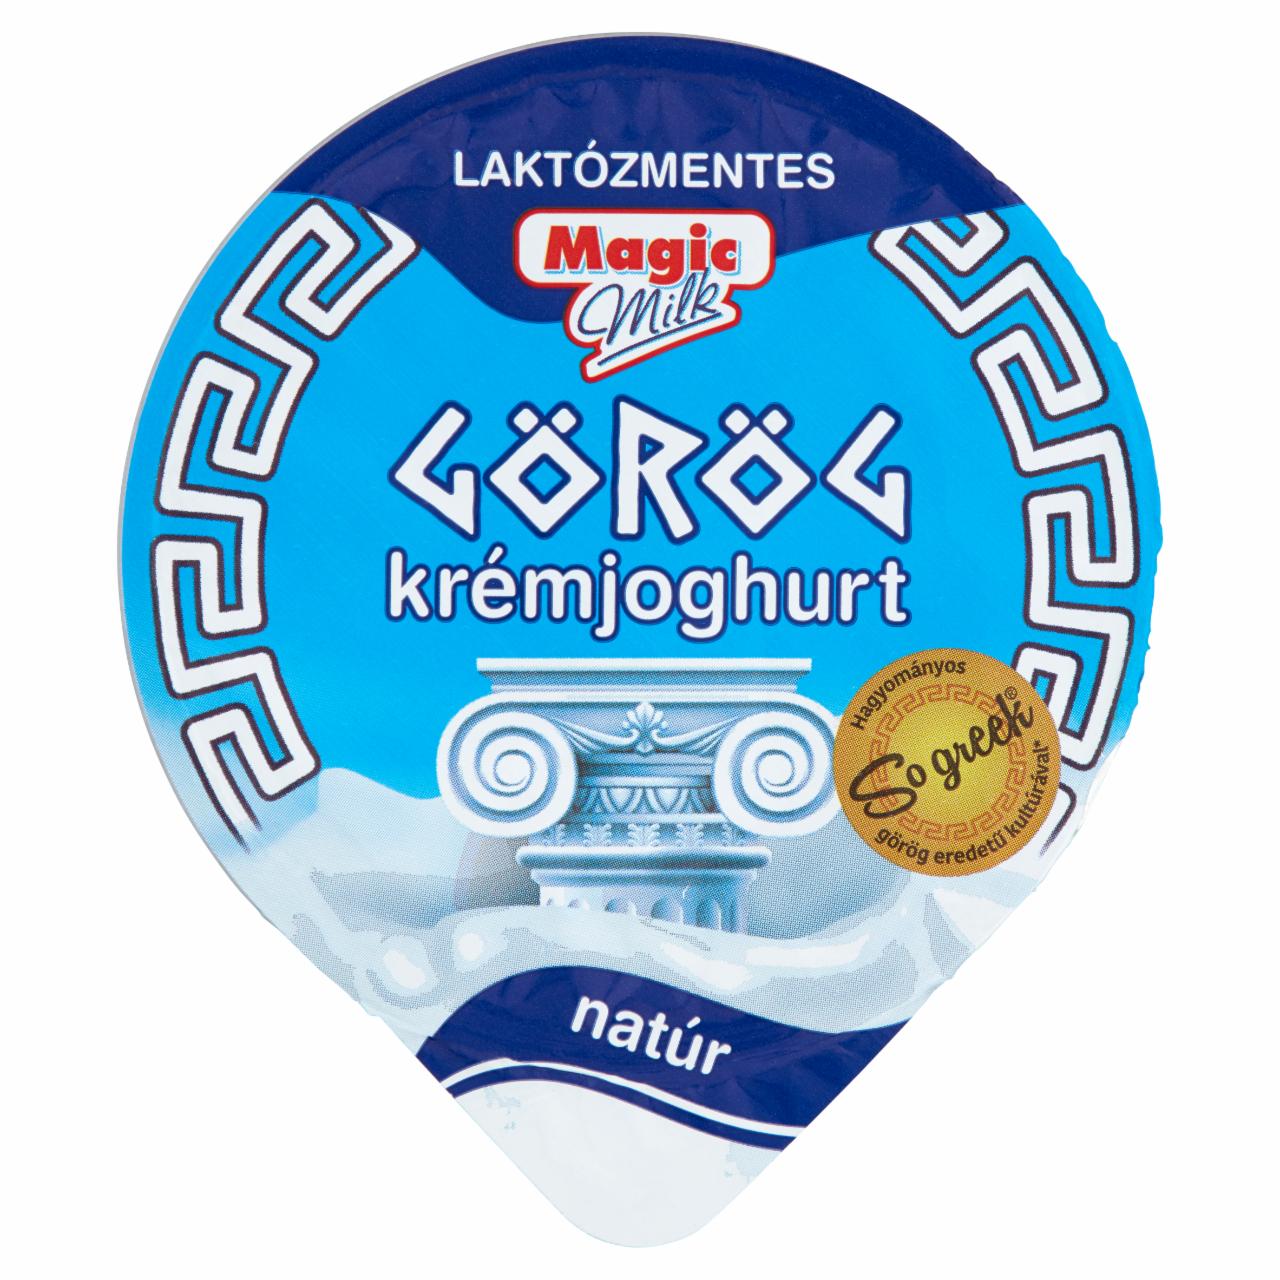 Képek - Magic Milk laktózmentes natúr görög joghurt 150 g